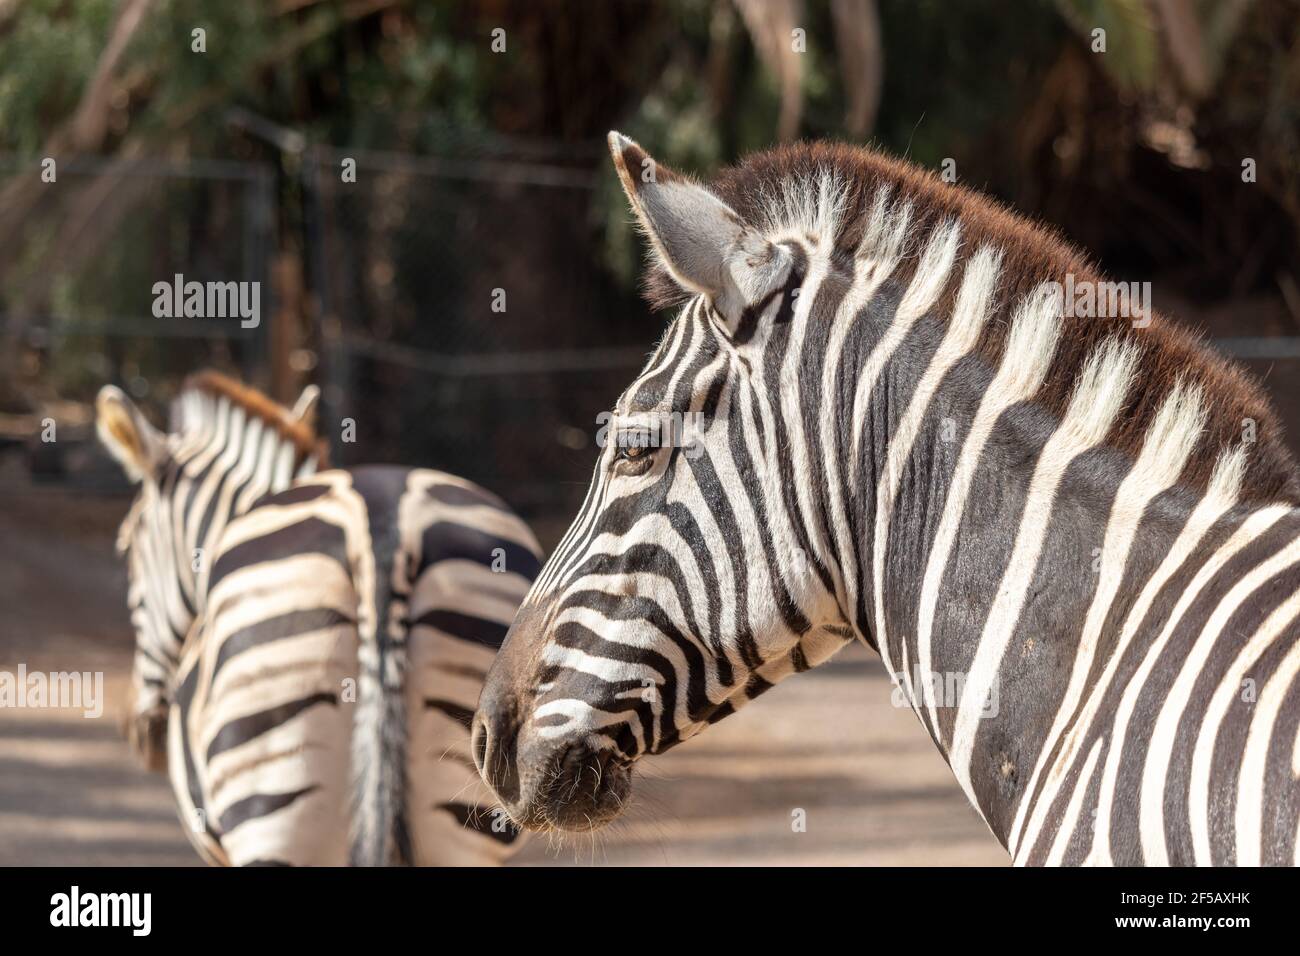 Portait of zebra. Zebra in zoo. Animal with black and white stripes. Photo of zebra's head. Stock Photo